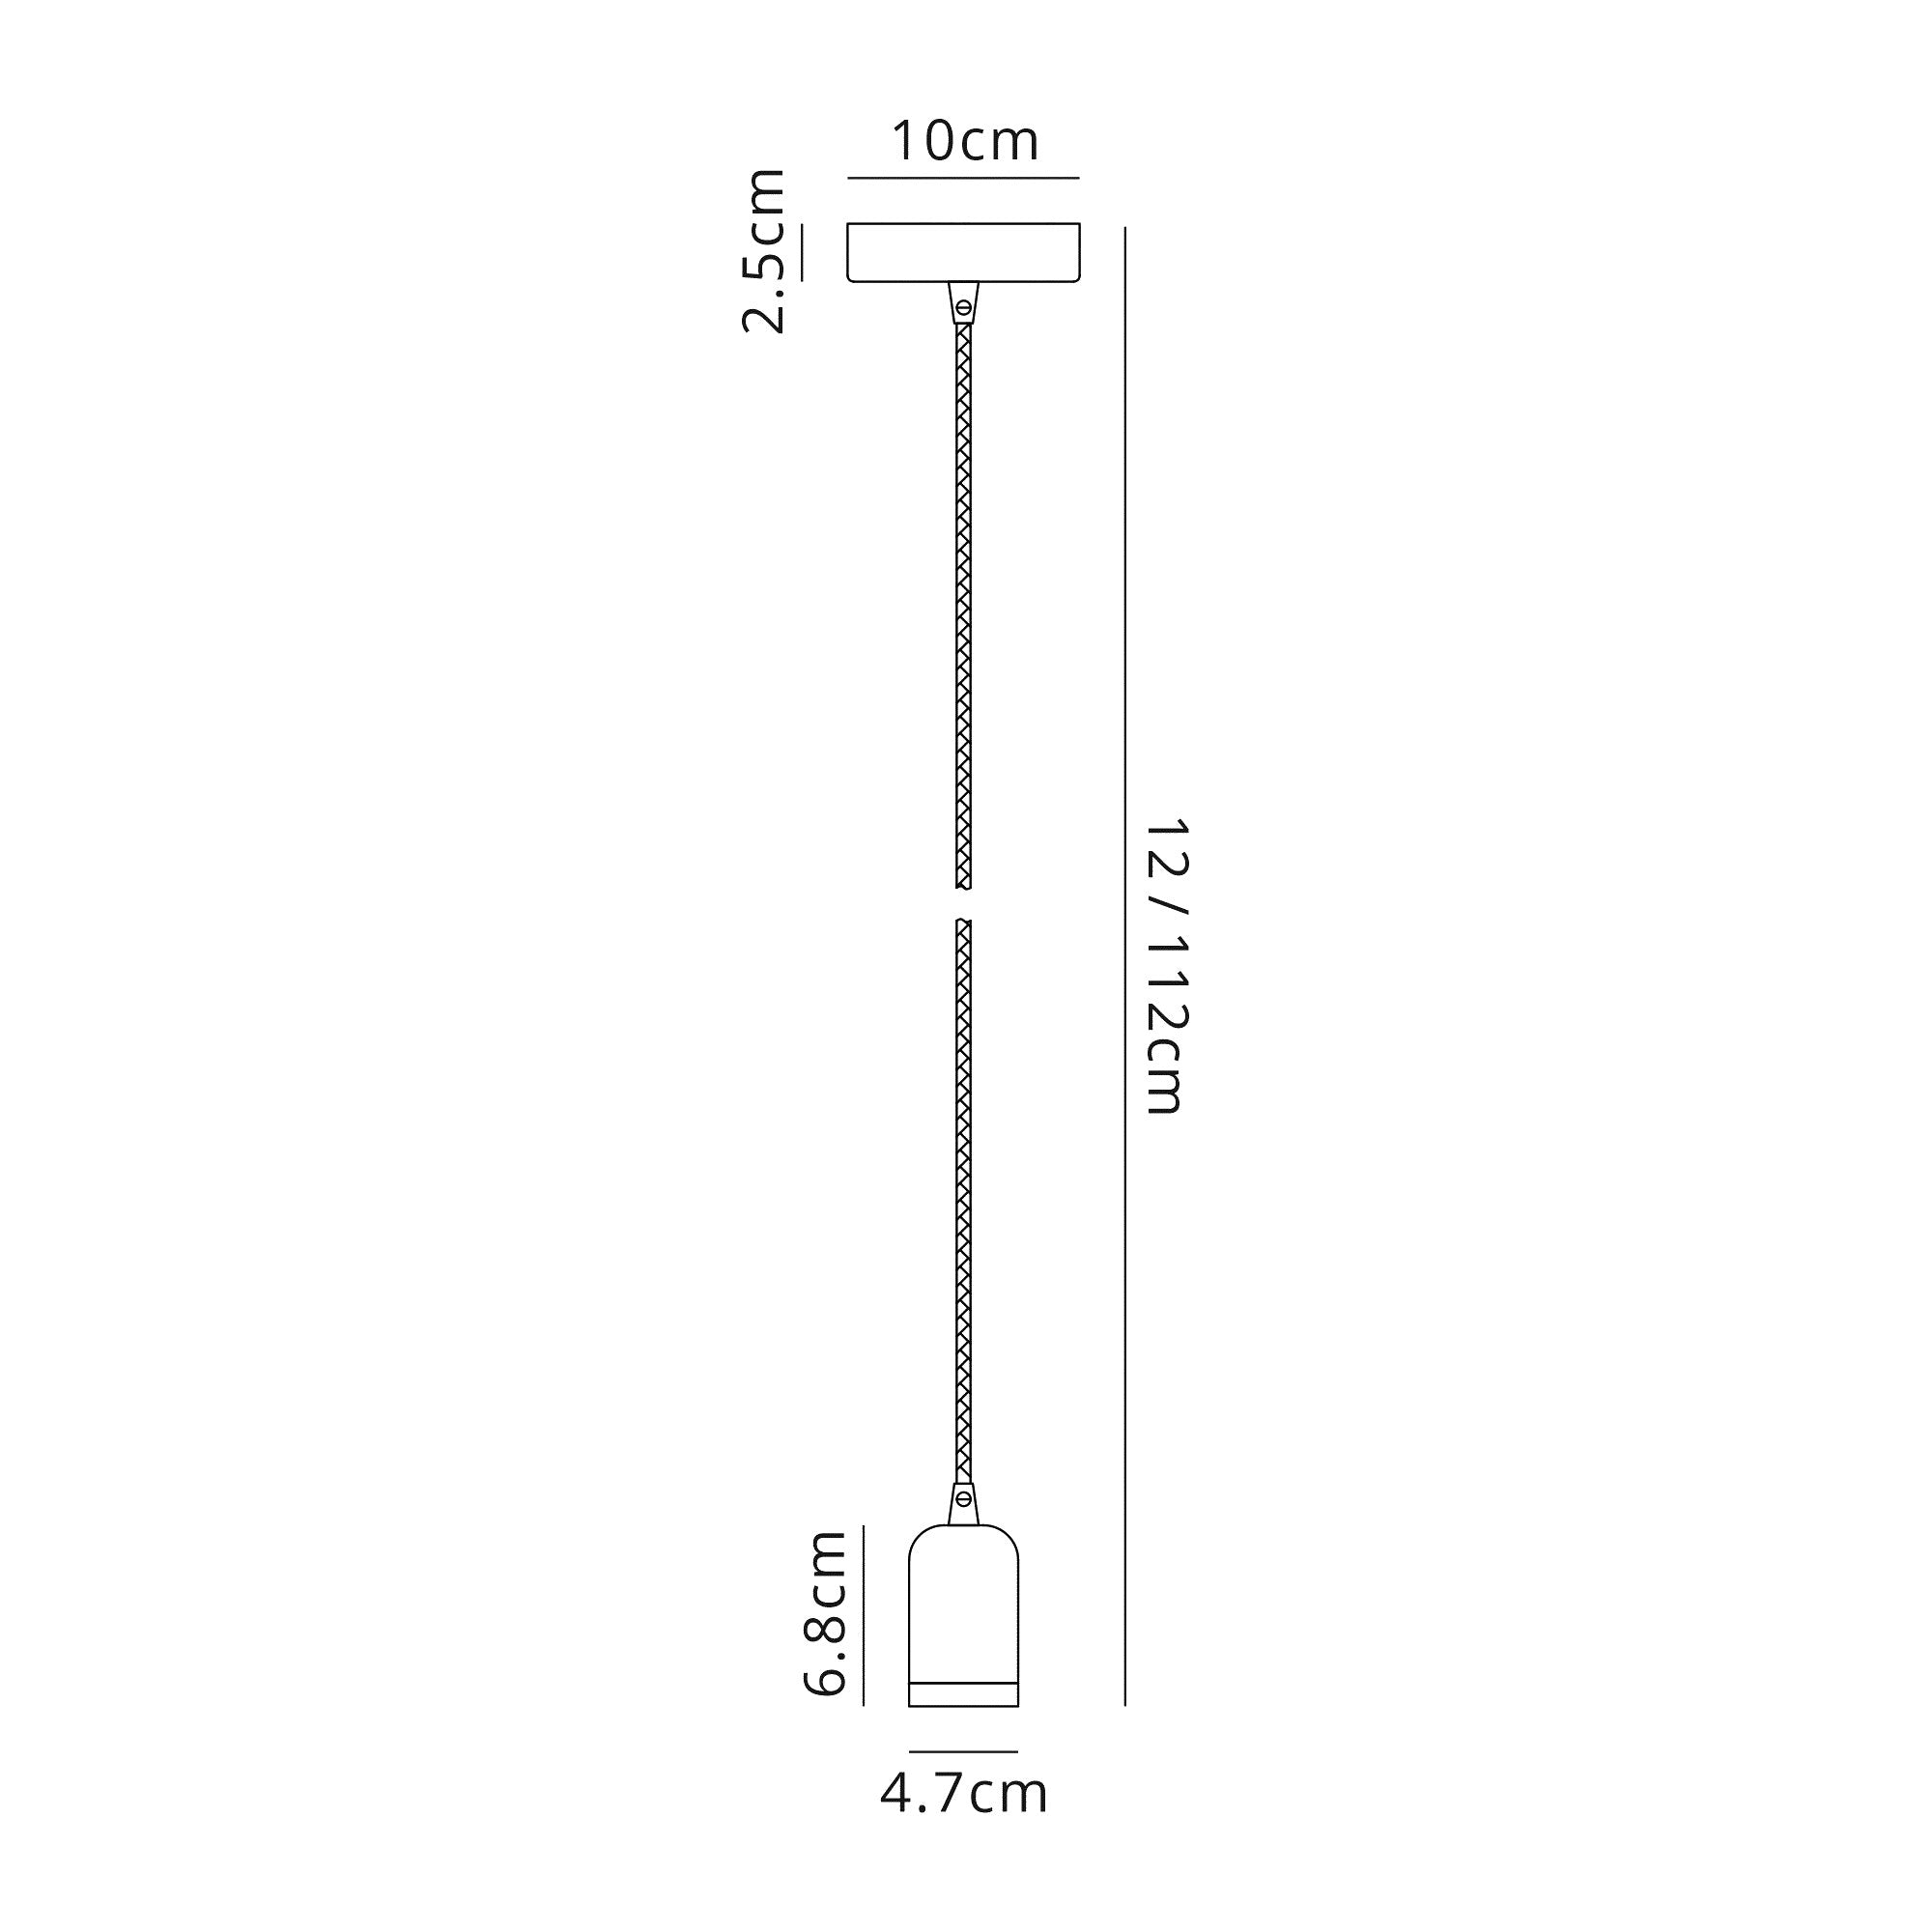 Arpeta 1m Suspension Kit 1 Light White/Black Braided Cable, E27 Max 60W, c/w Ceiling Bracket